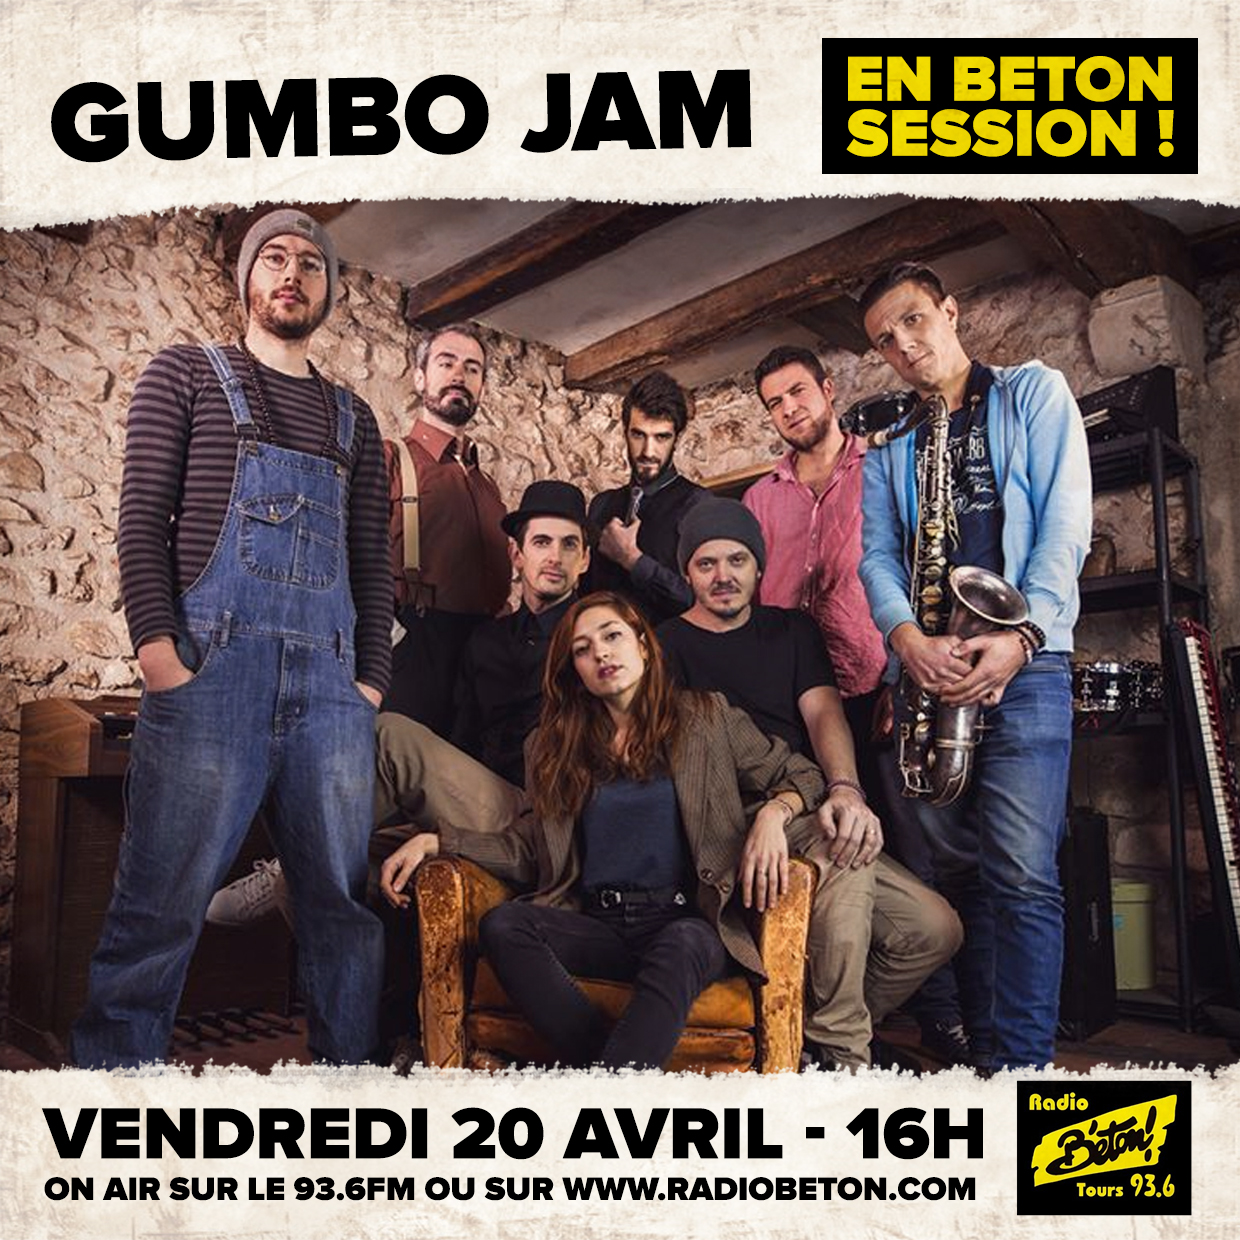 Béton Session – Gumbo Jam